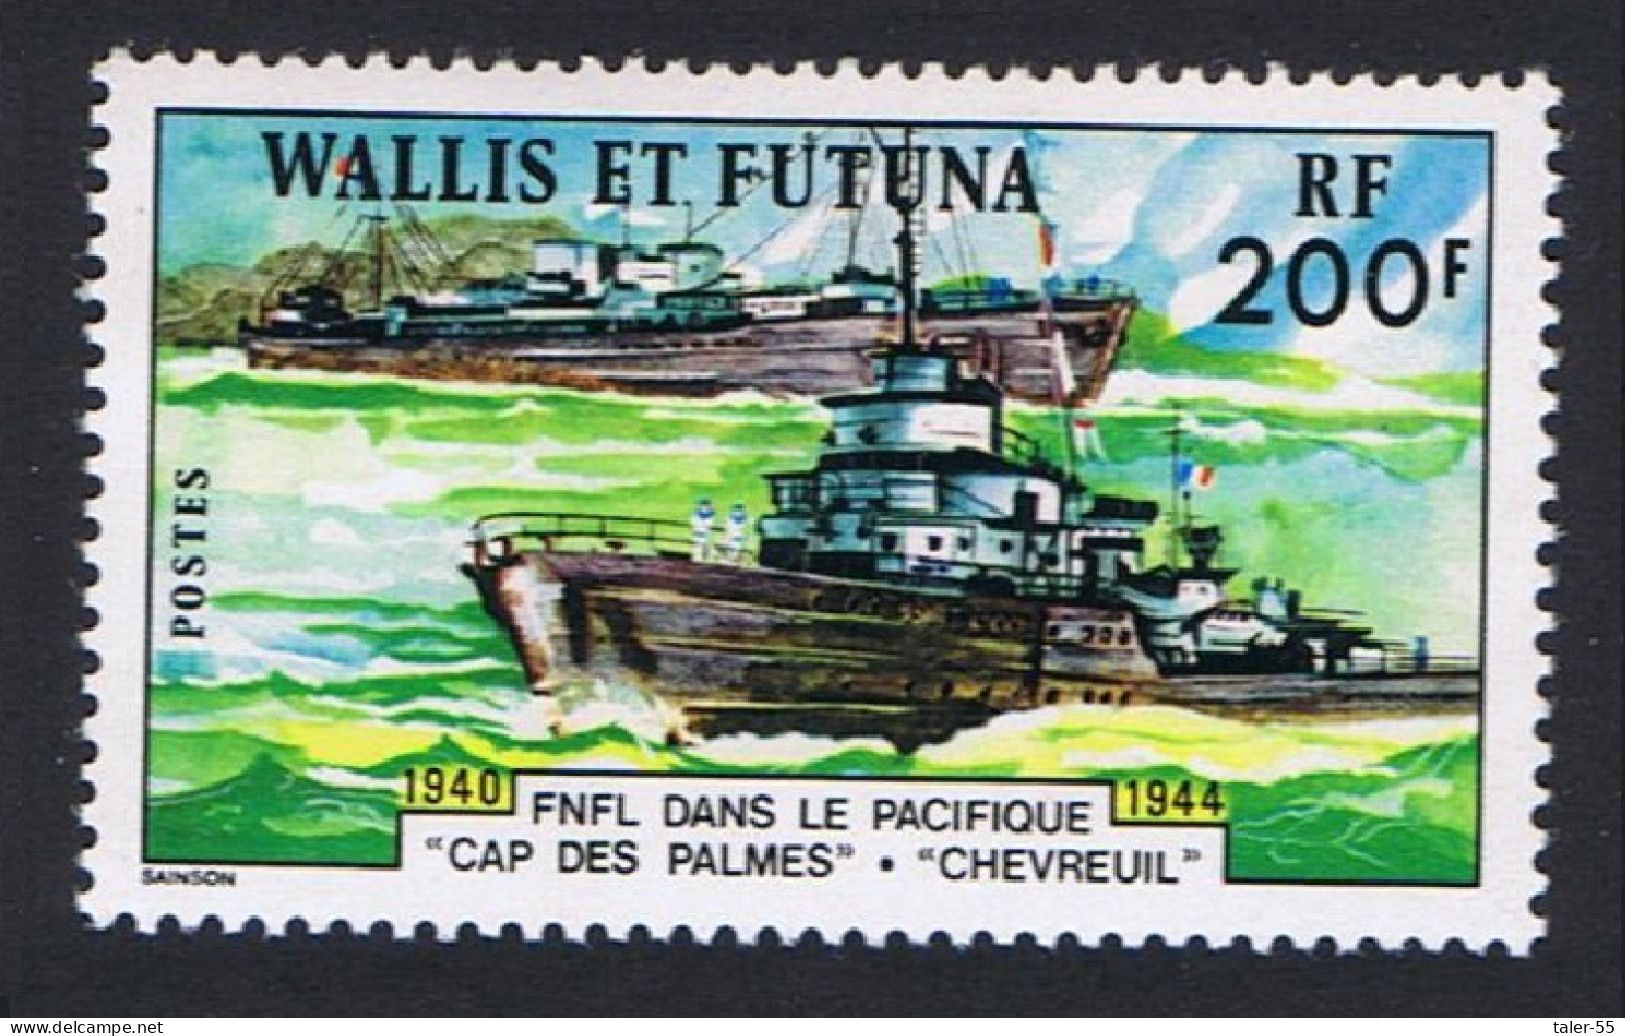 Wallis And Futuna Pacific Naval Force 200f 1978 MNH SG#288 Sc#208 - Nuovi